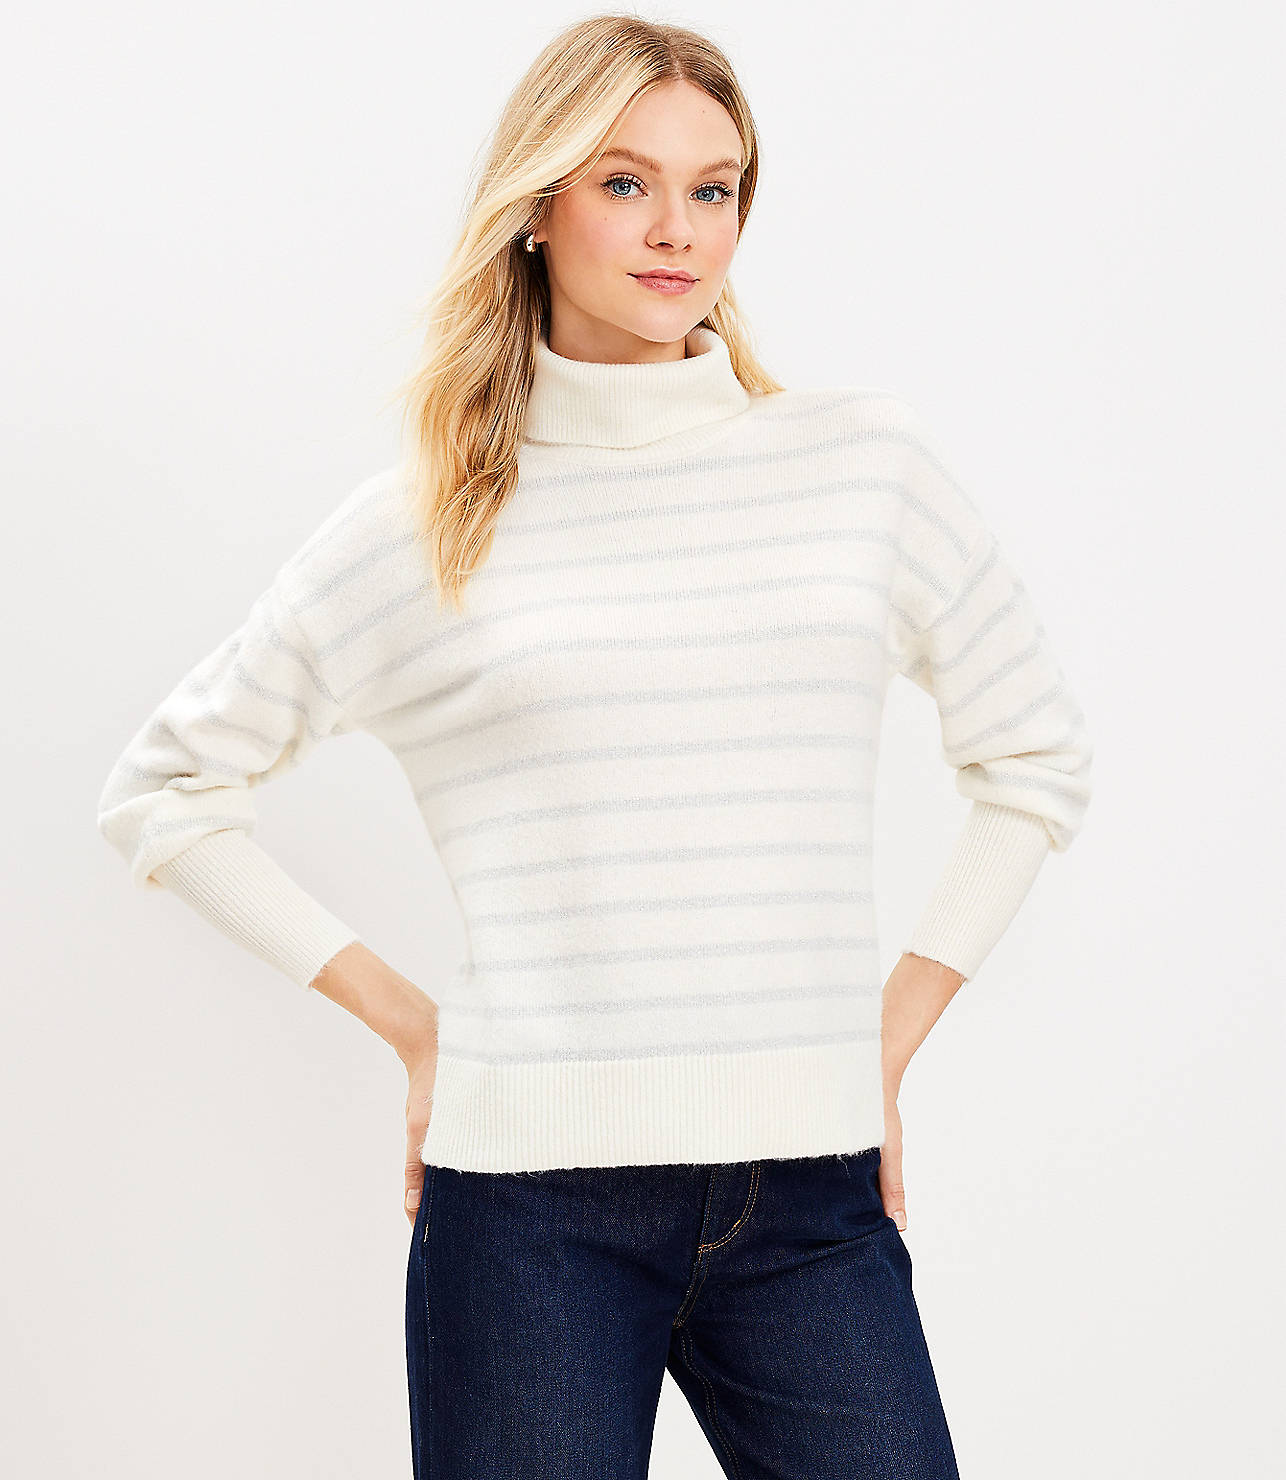 Shimmer Stripe Turtleneck Sweater